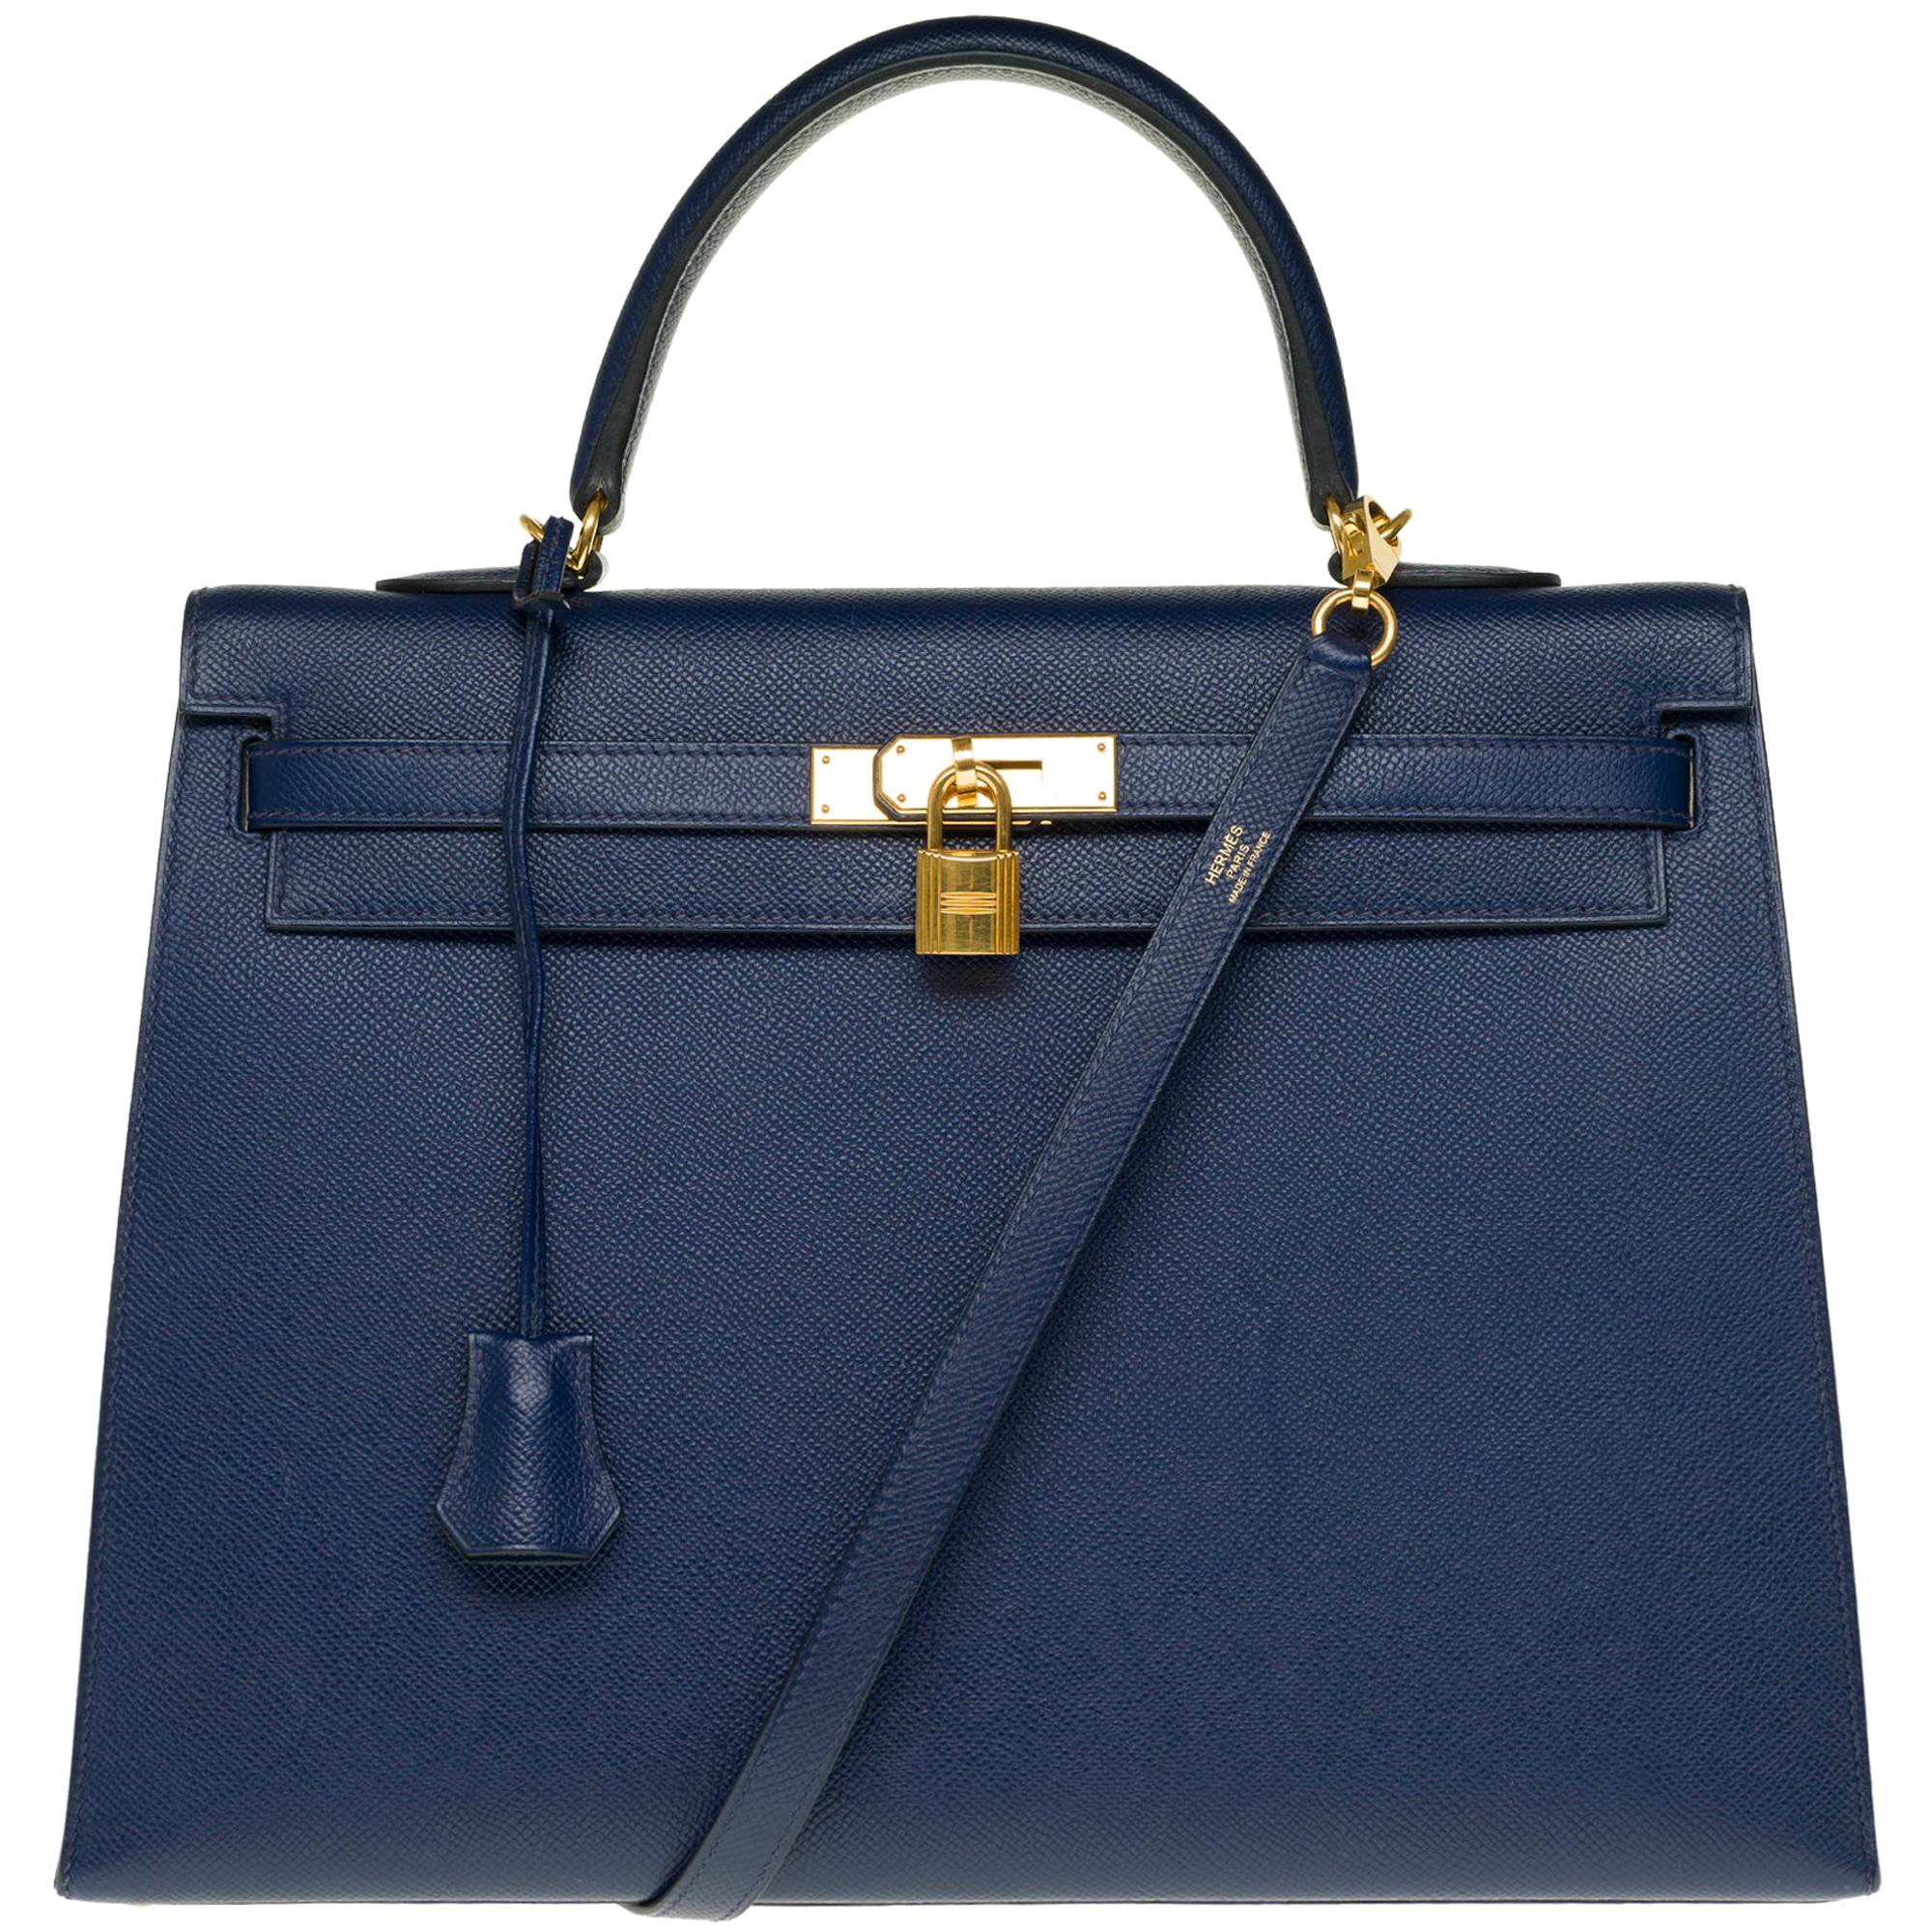 Hermès Kelly 35 sellier strap shoulder bag in epsom blue saphir, PHW